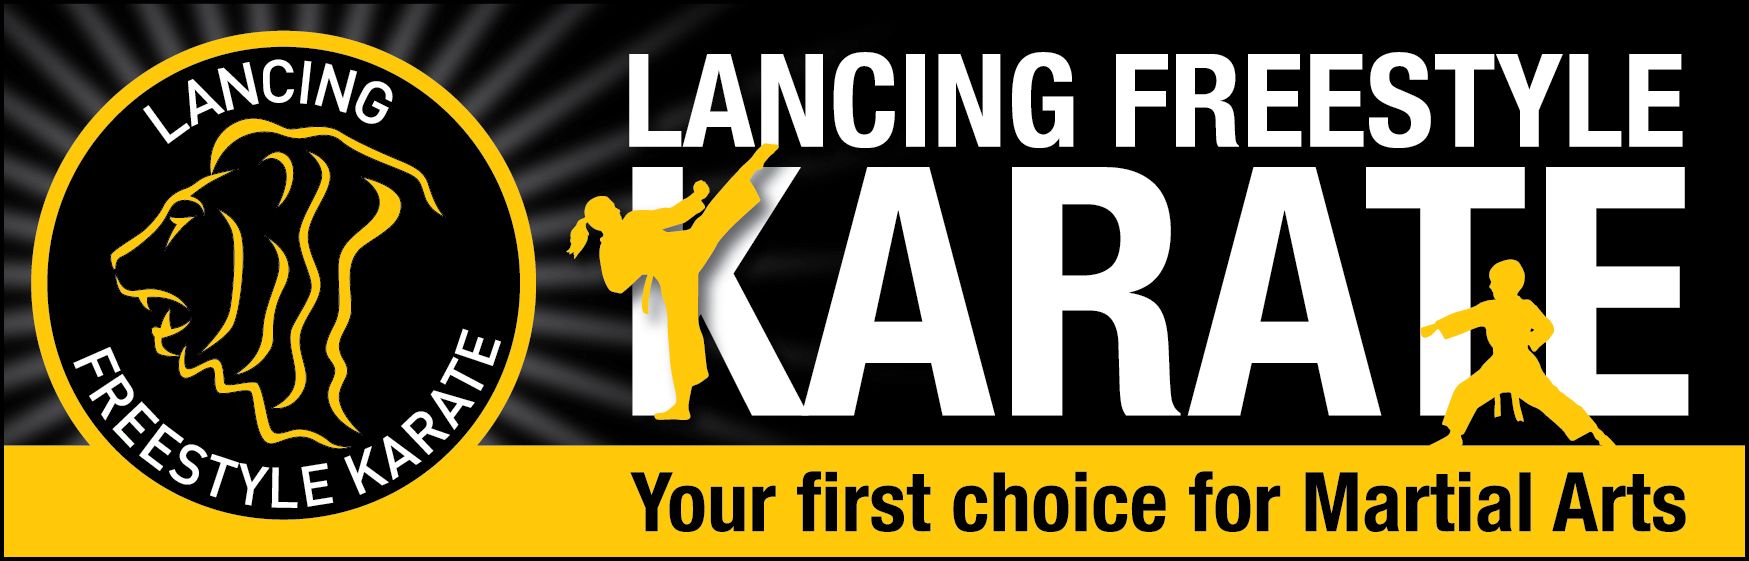 Lancing Freestyle Karate, West Sussex header